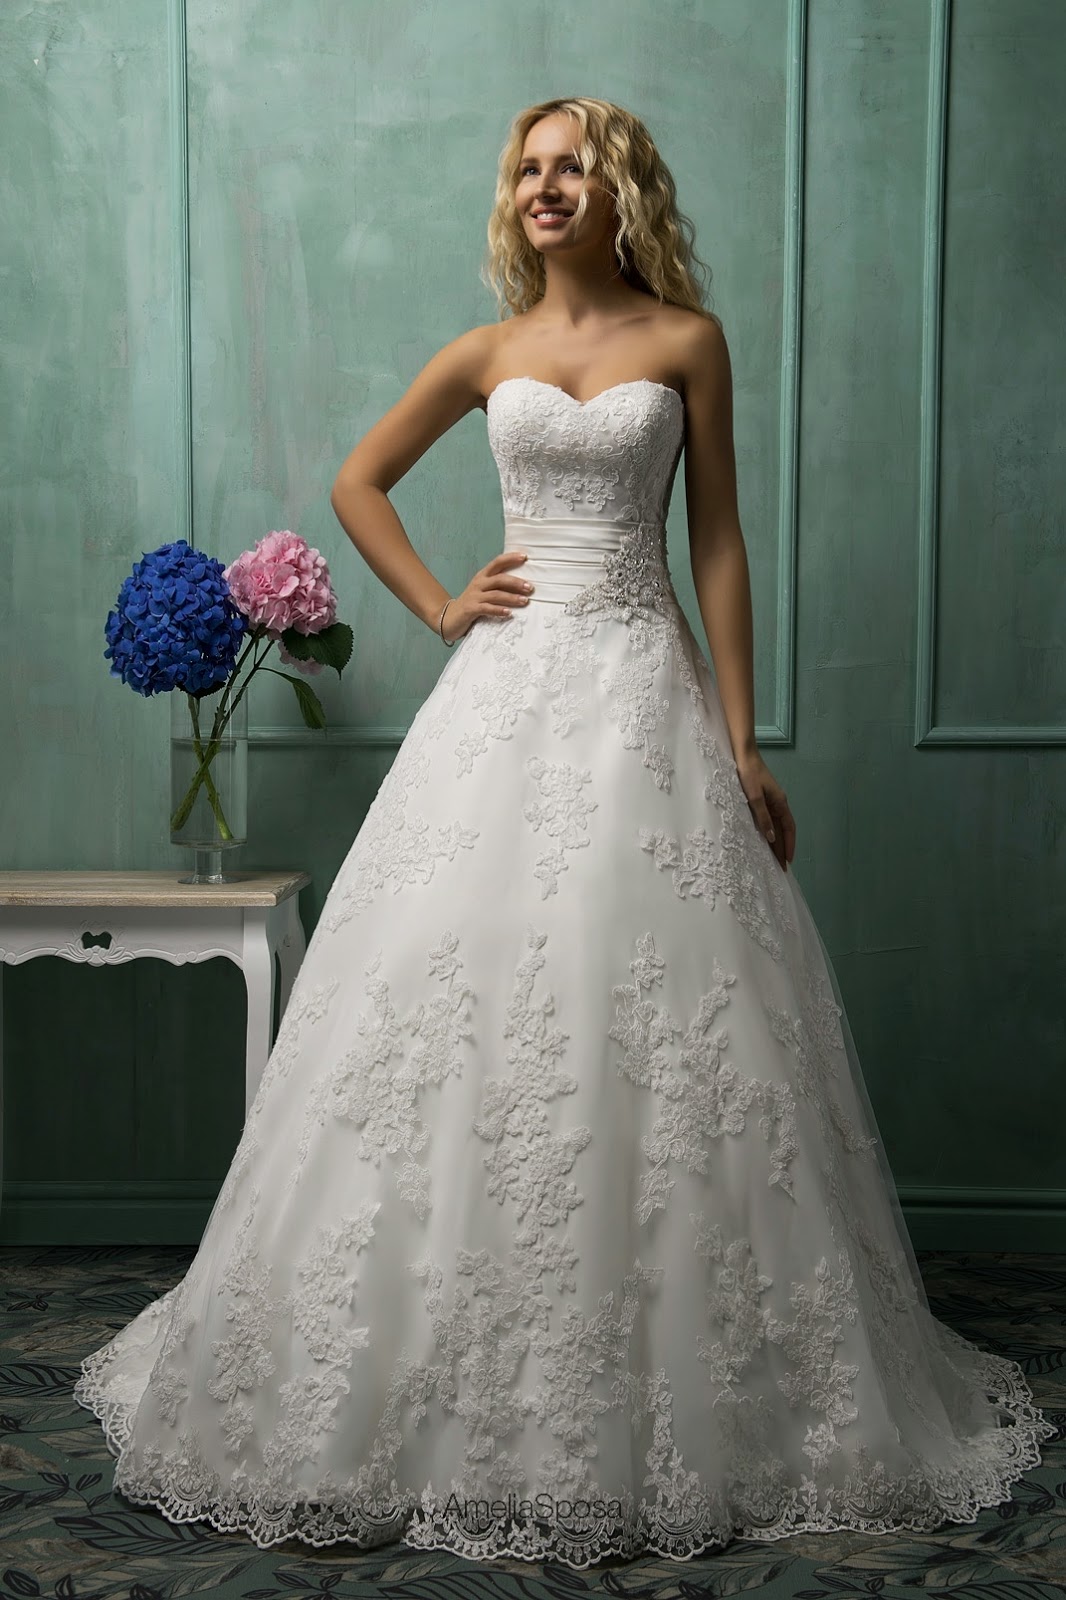 Amelia Sposa 2014 Wedding Dresses Collection Part 3 - Glowlicious.Me ...